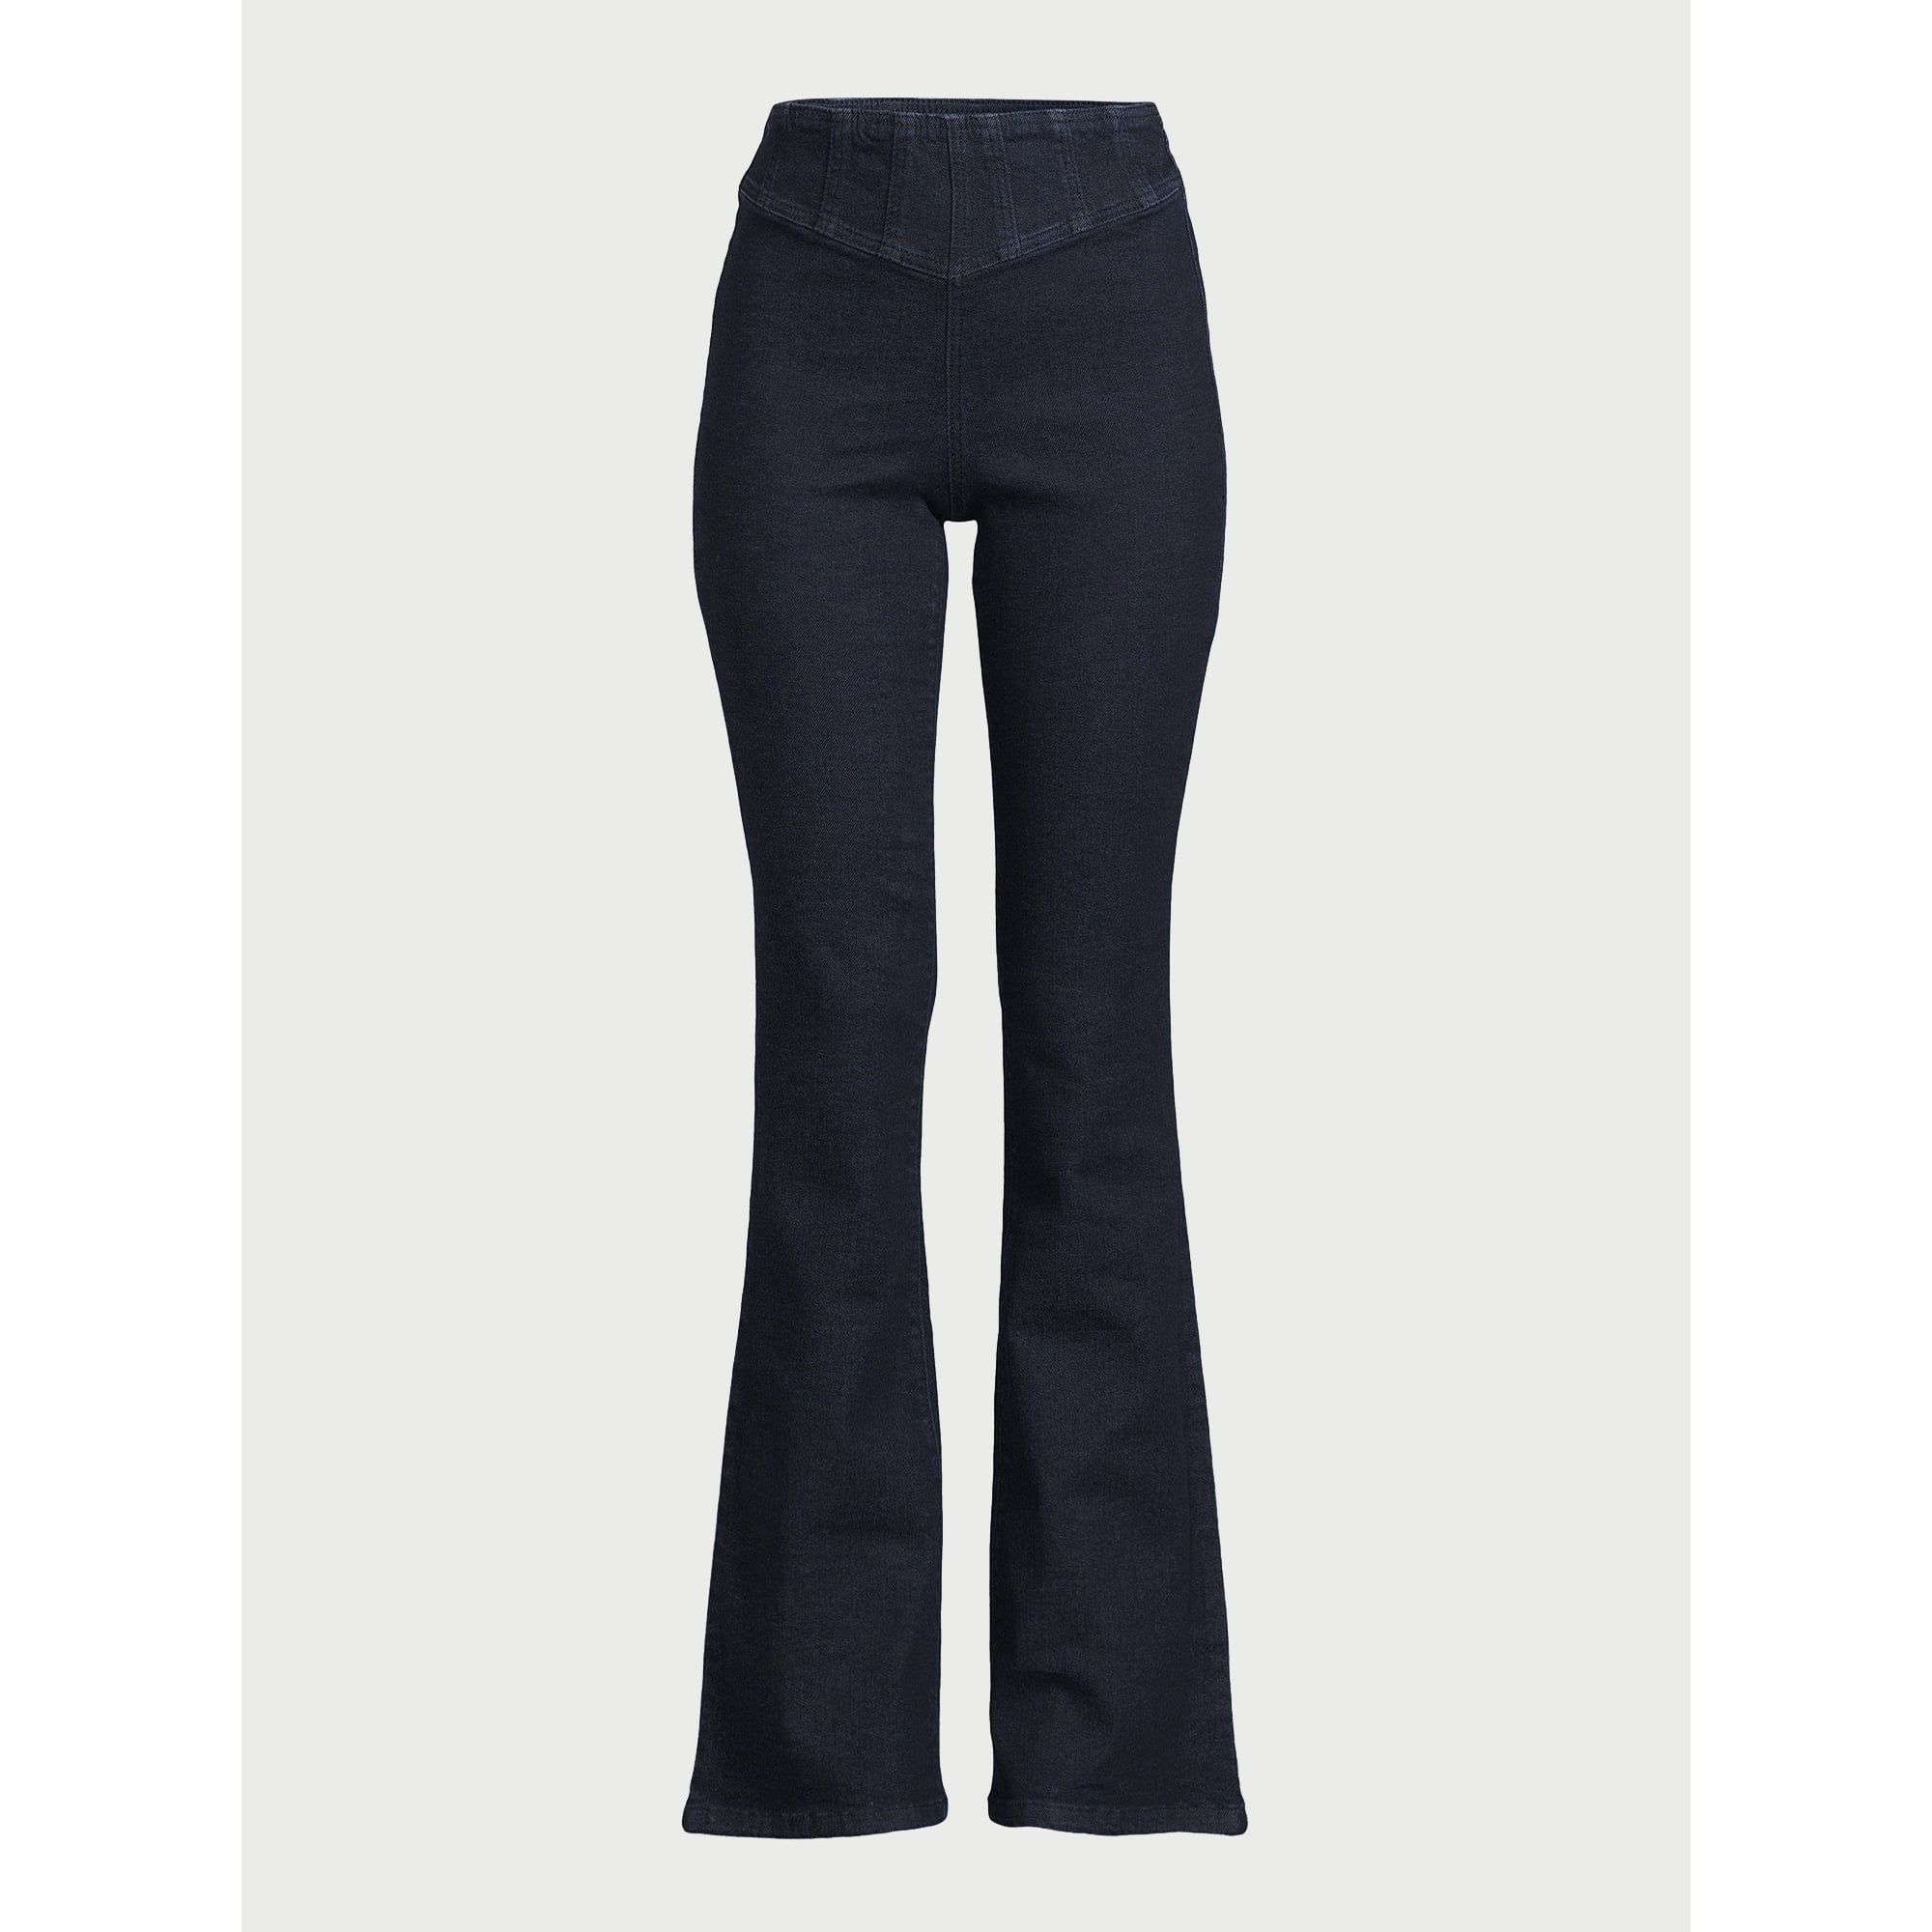 Sofia Jeans Women's Melisa Curvy Flare Super High Rise Corset Jeans, 33.5" Inseam, Sizes 00-22 | Walmart (US)